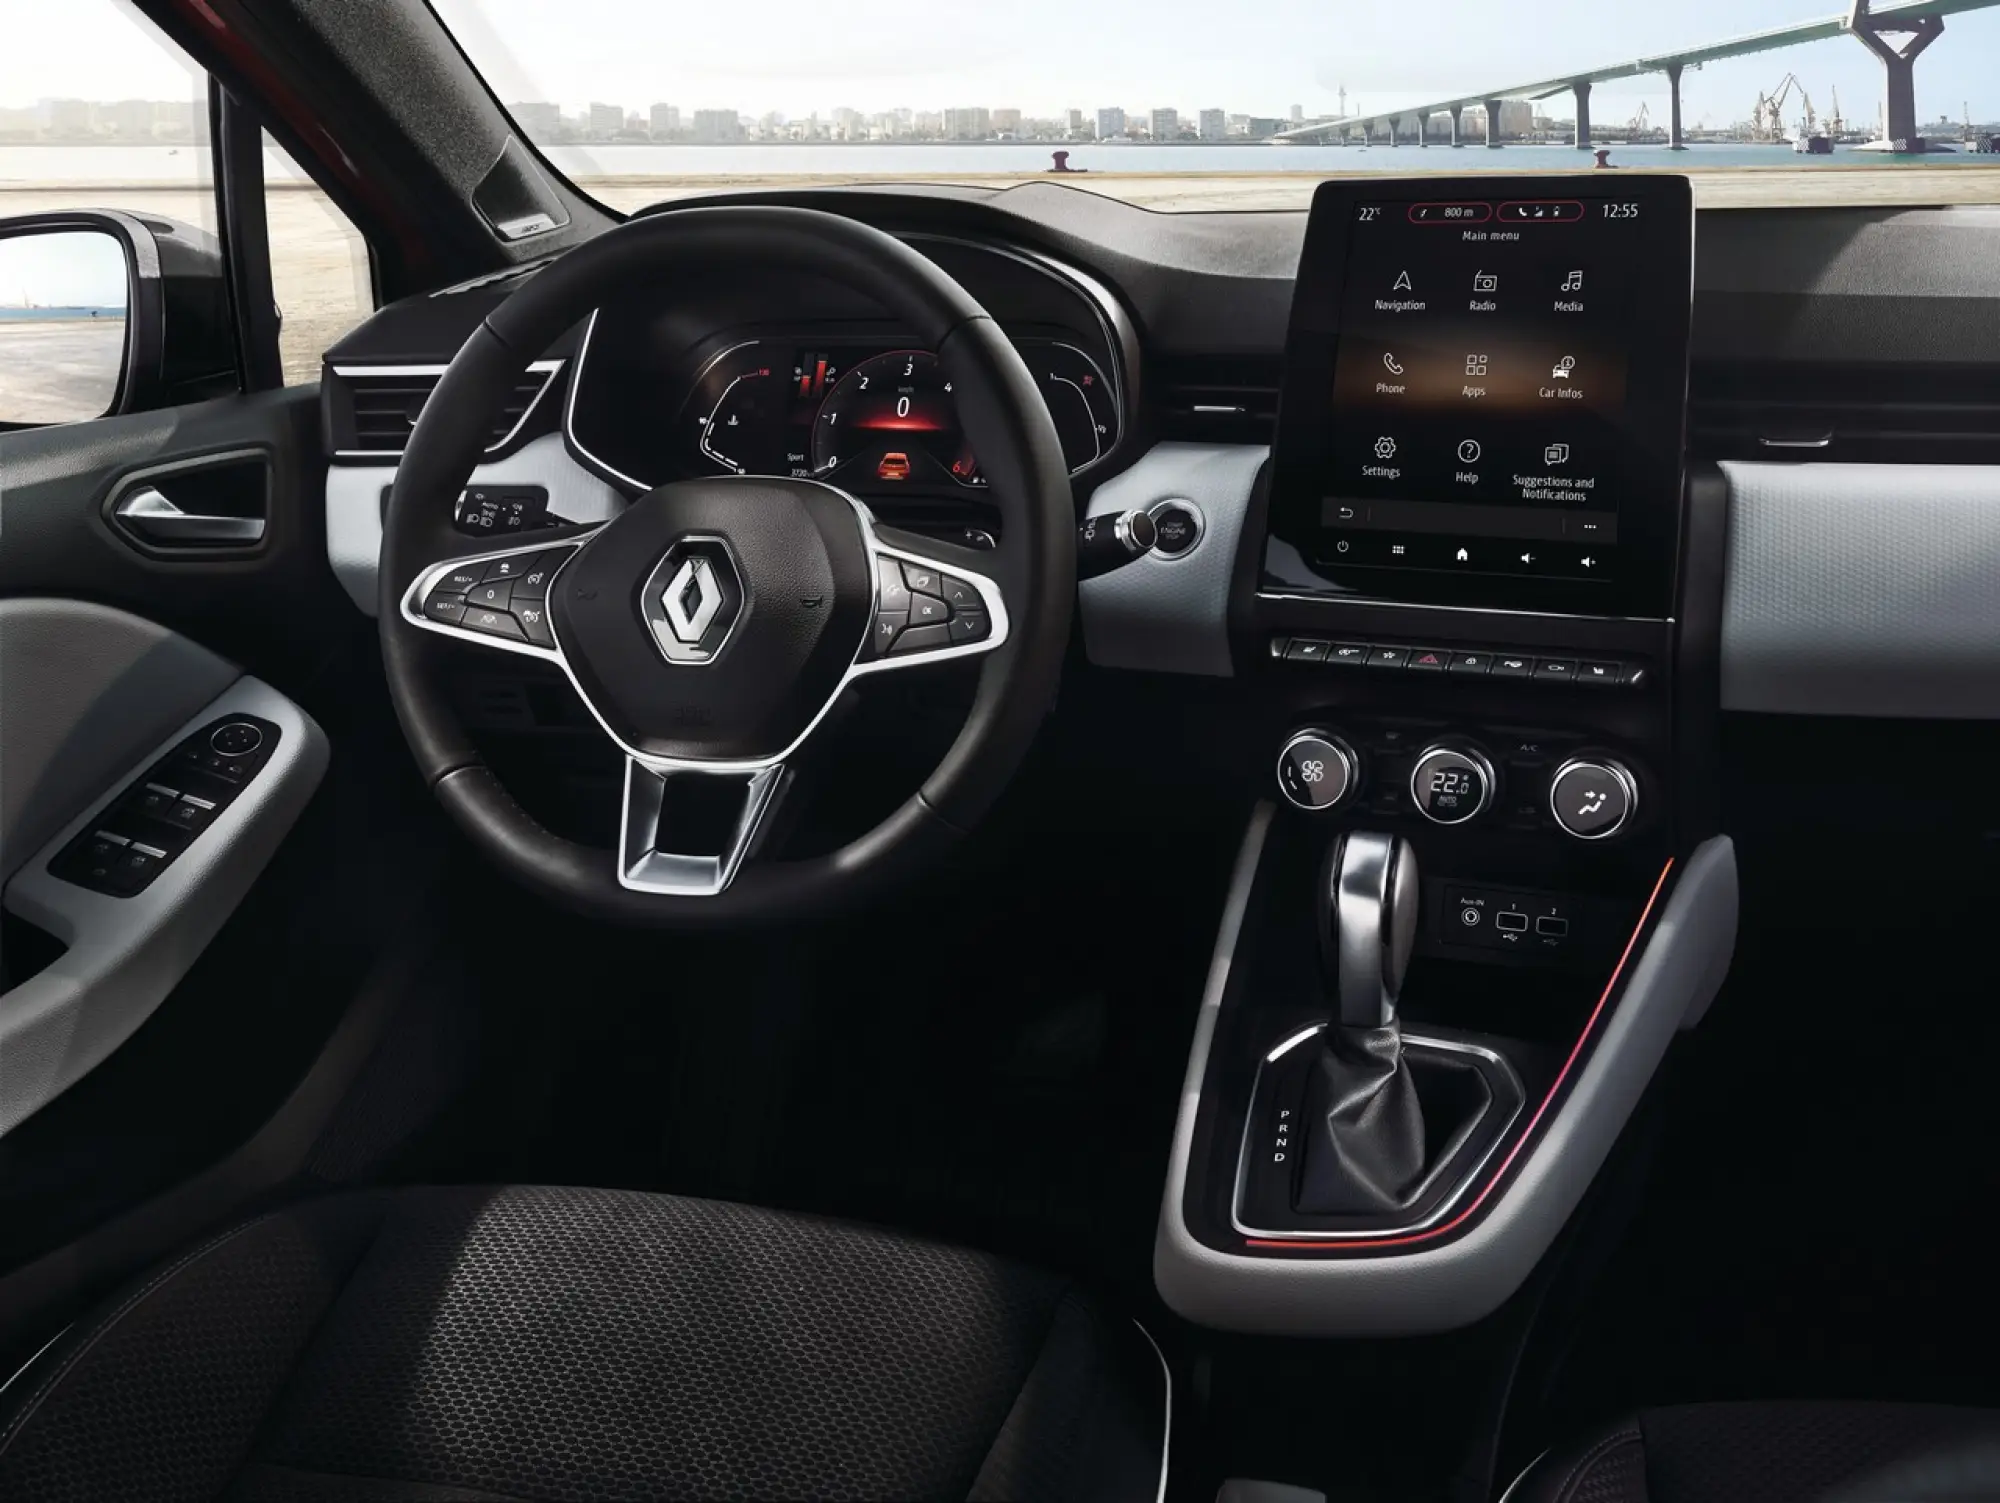 Nuova Renault Clio interni 2019 - 7